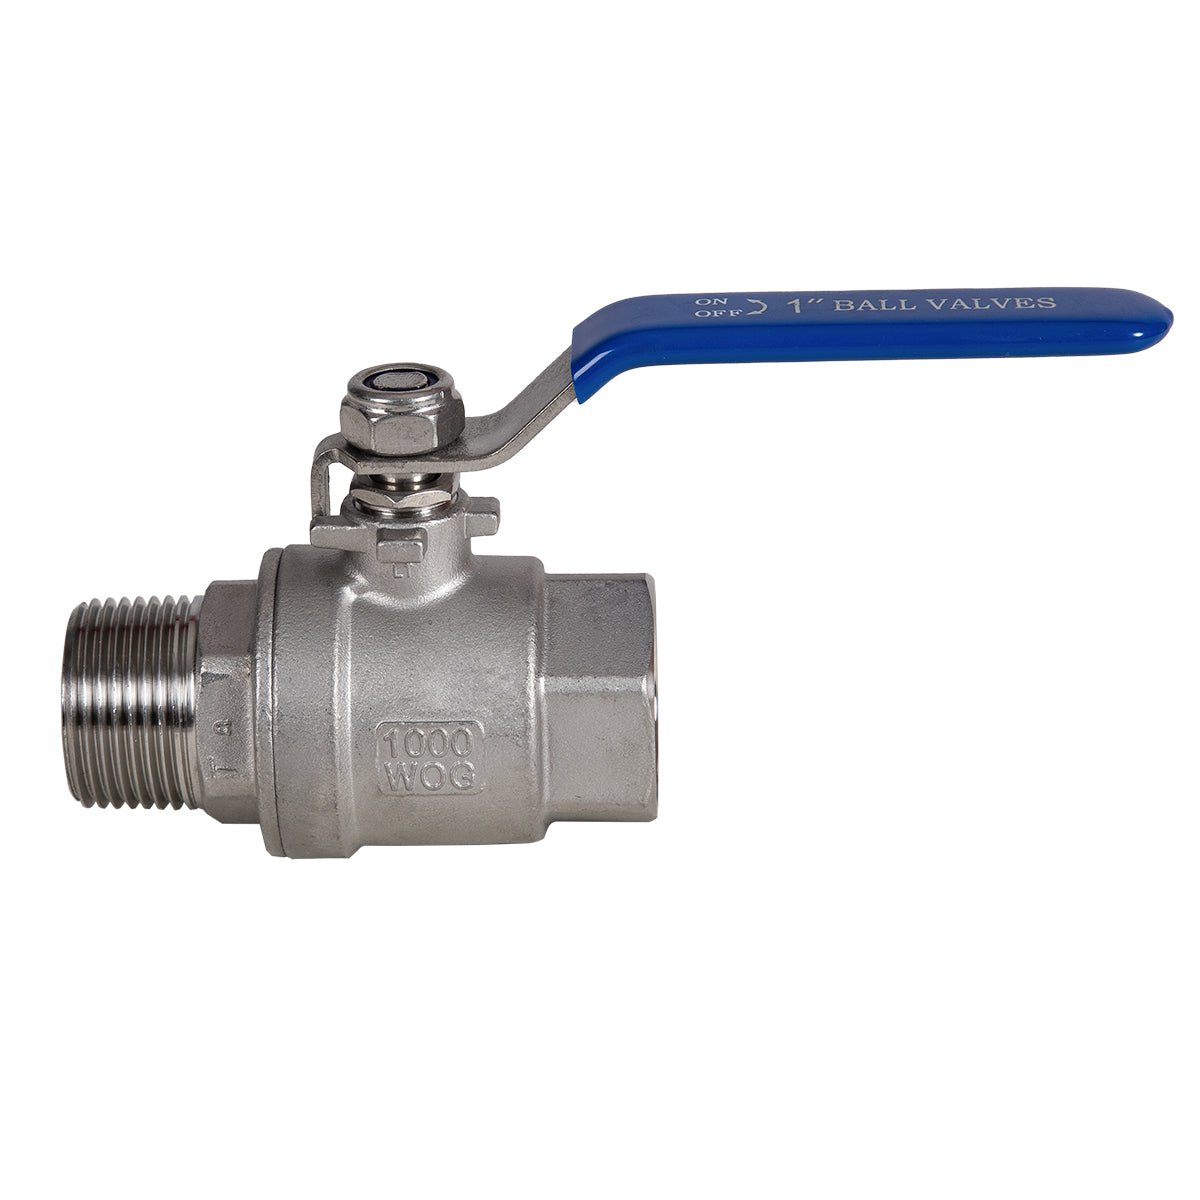 JIVTO 2 PC Stainless steel ball valve, NPT male to female, standard port valve - JIVTO